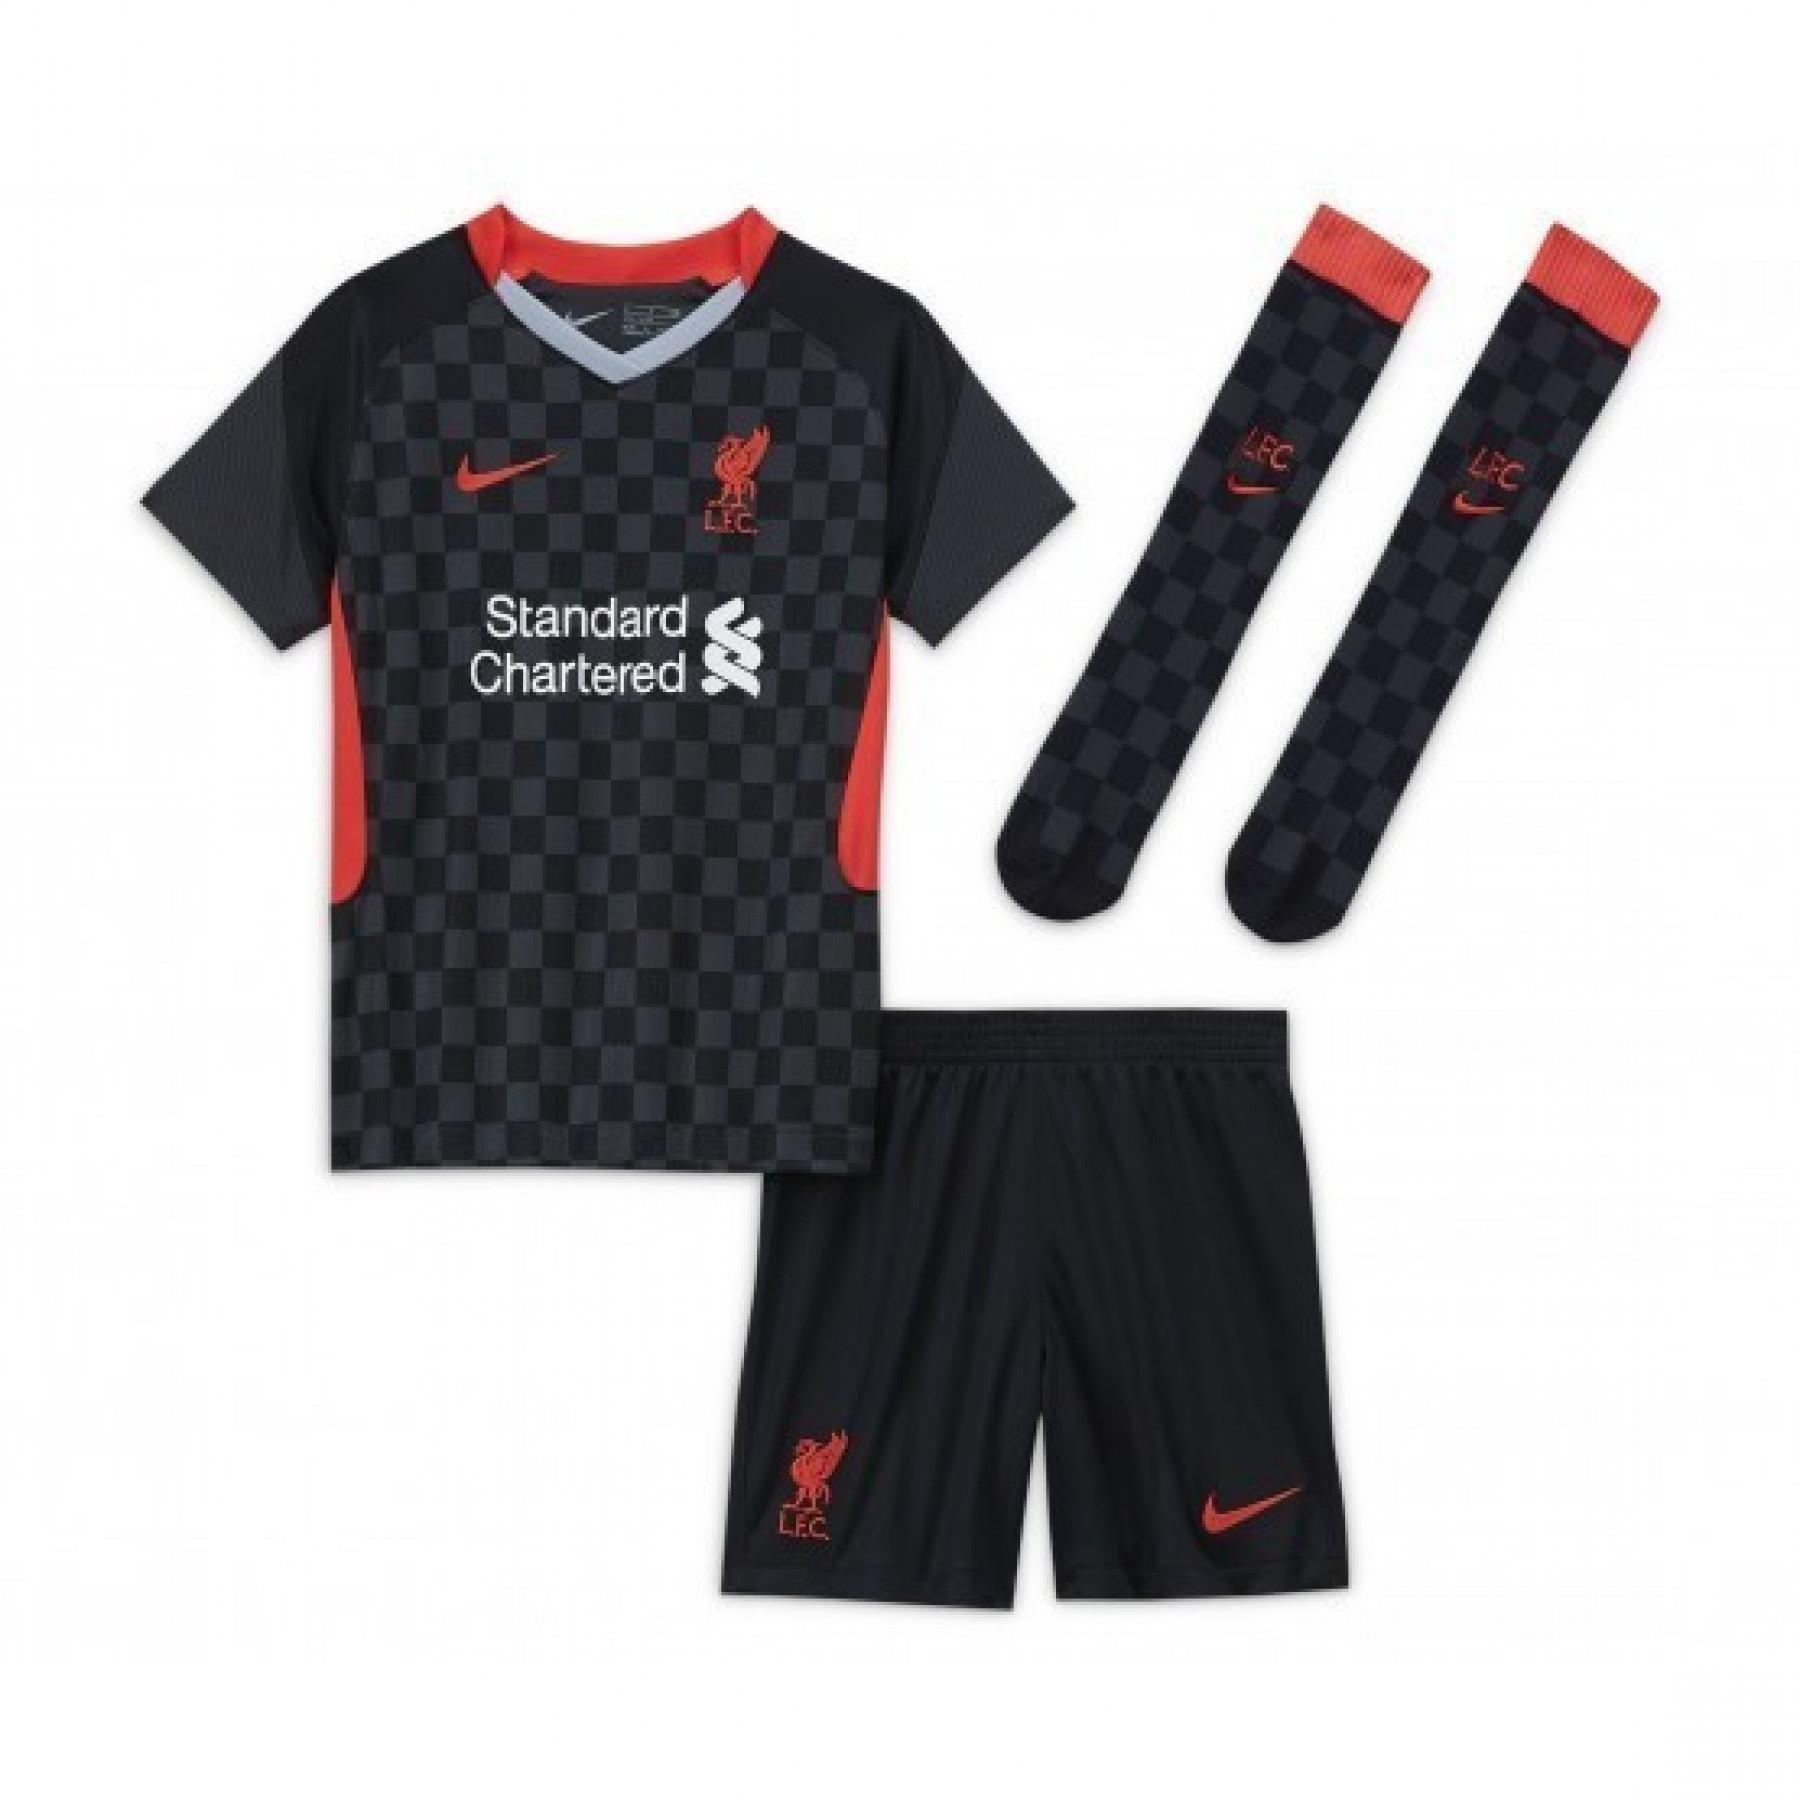 Mini-kit bambini third Liverpool 2020/21